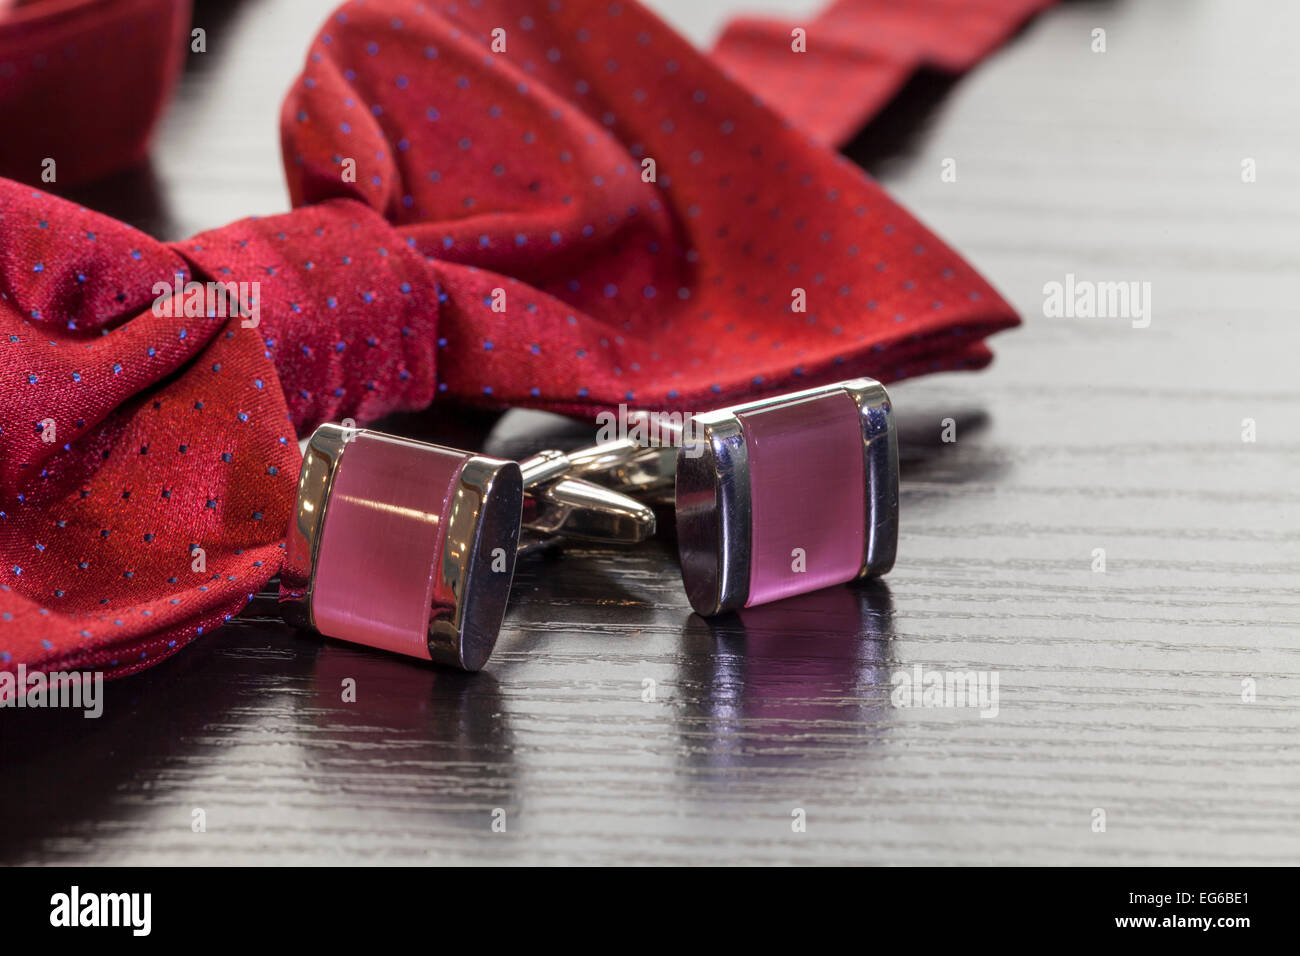 Bracciale in argento links e red bow tie Foto Stock